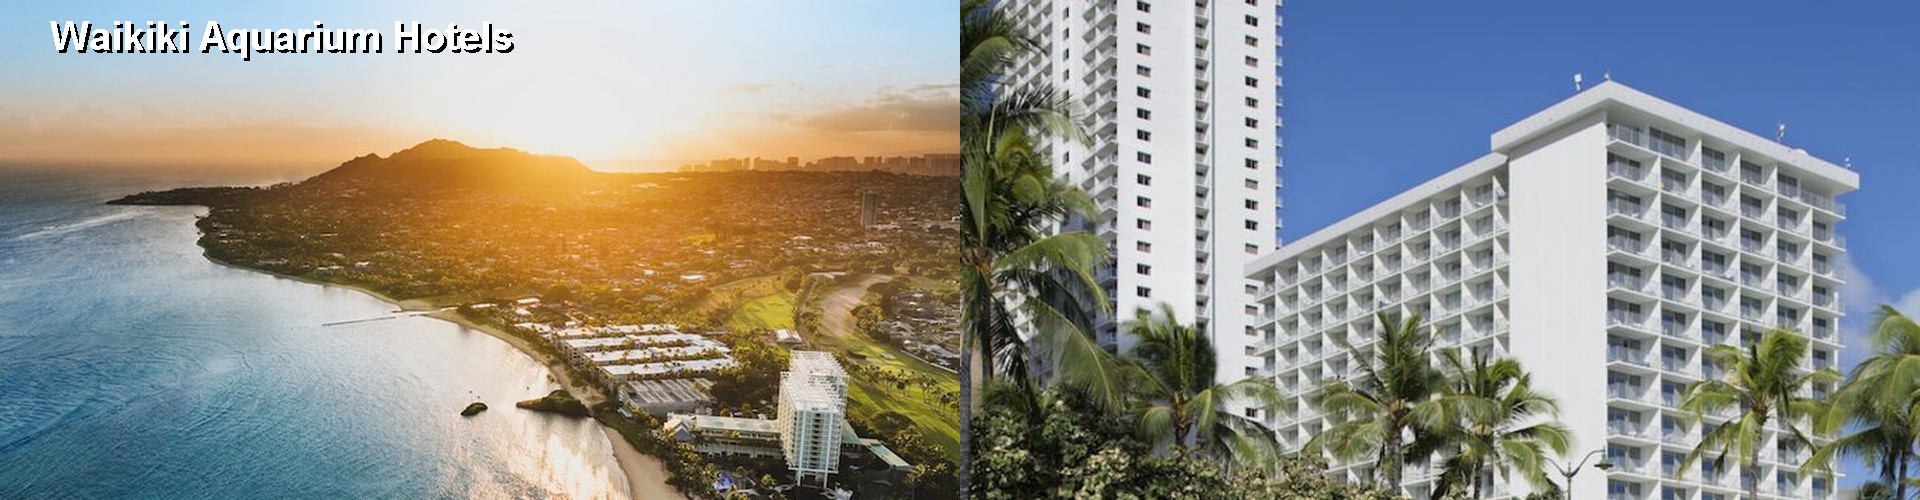 5 Best Hotels near Waikiki Aquarium